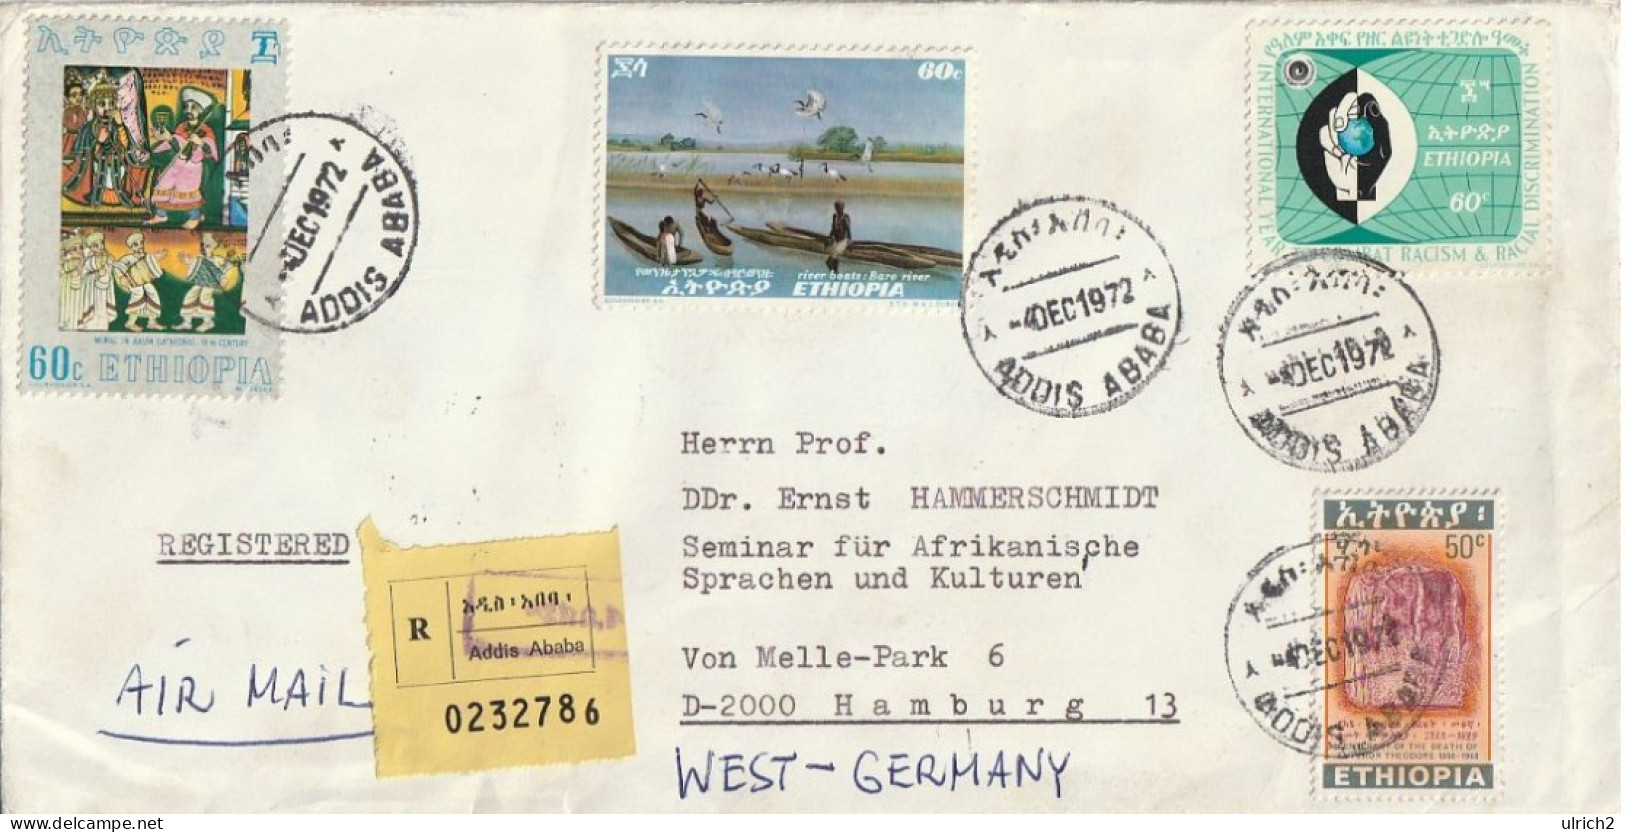 Äthiopien Ethiopia - Airmail Registered Letter - Austrian Embassy - To Germany - 1972 (67141) - Ethiopie